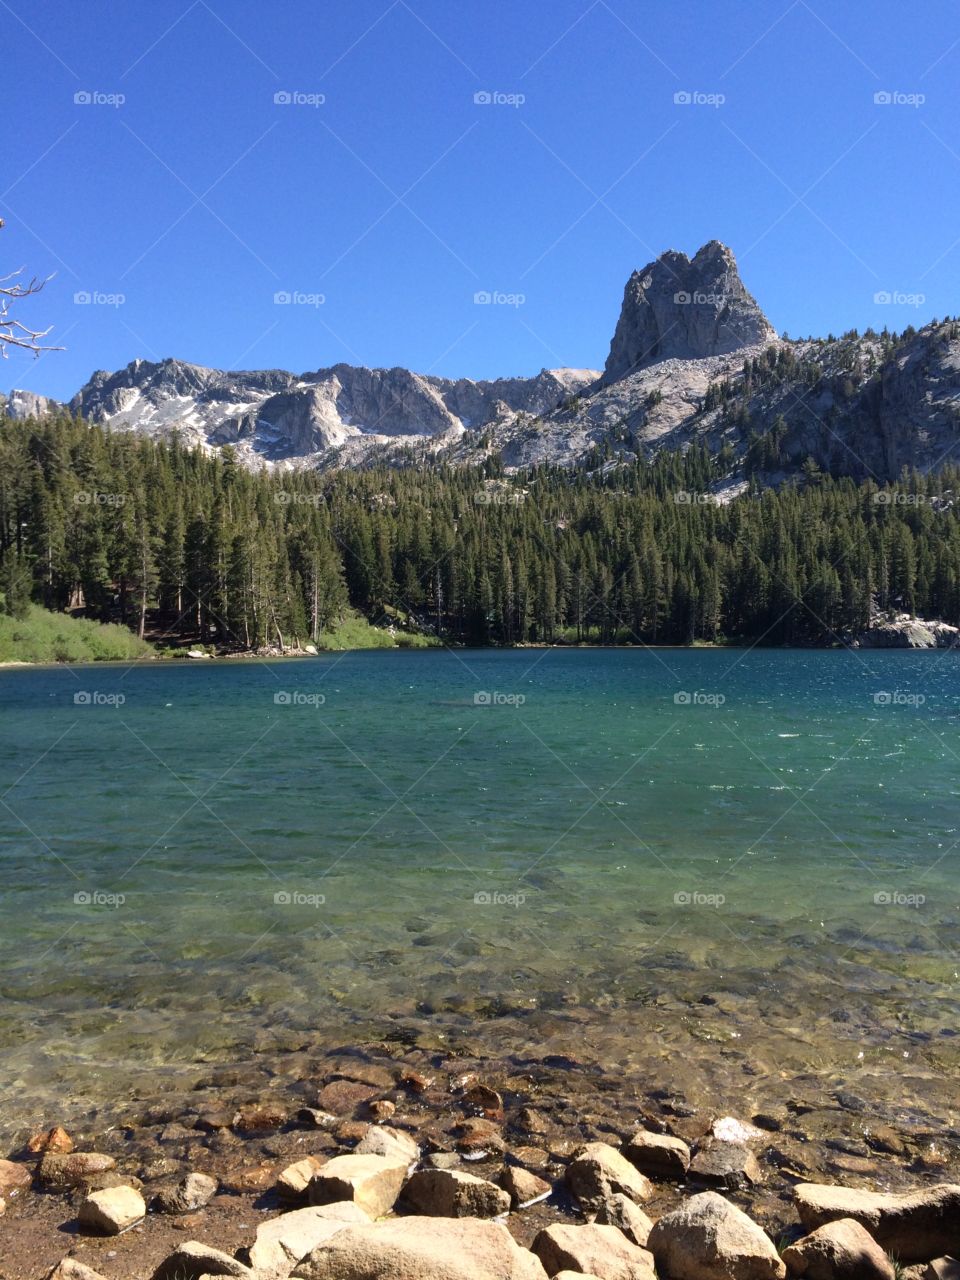 Lake in the Sierras